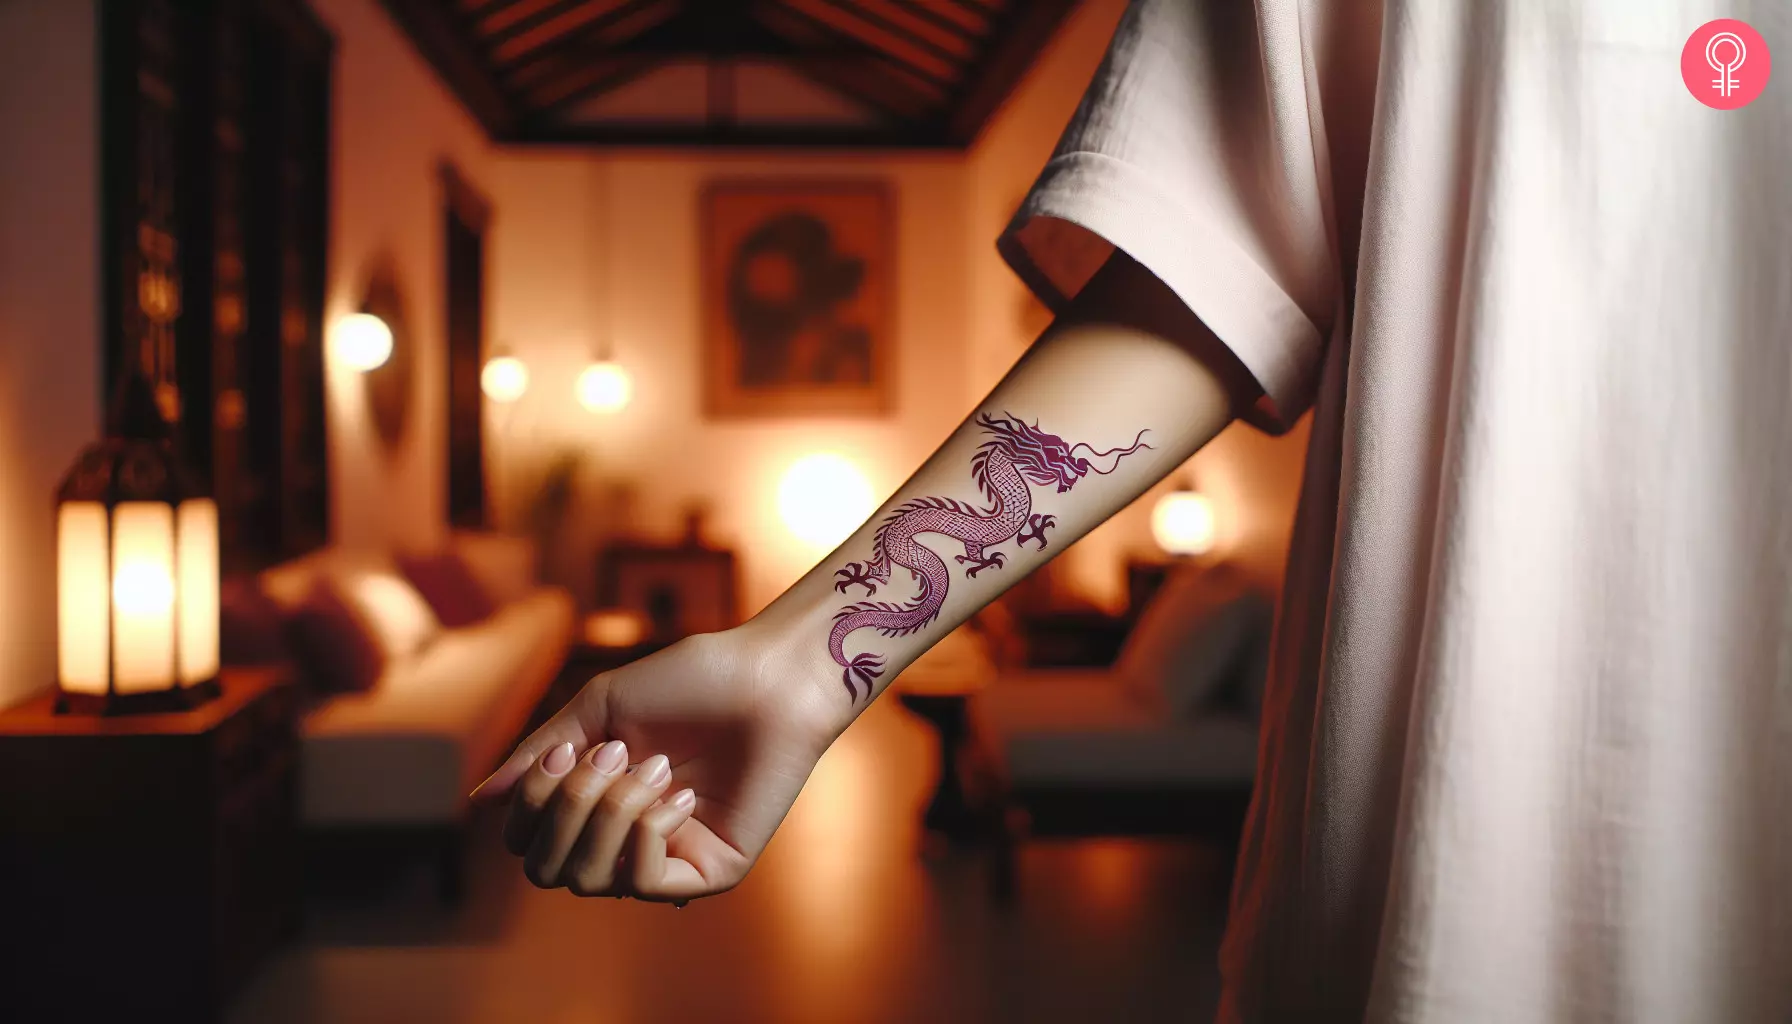 A purple dragon tattoo on the wrist and forearm